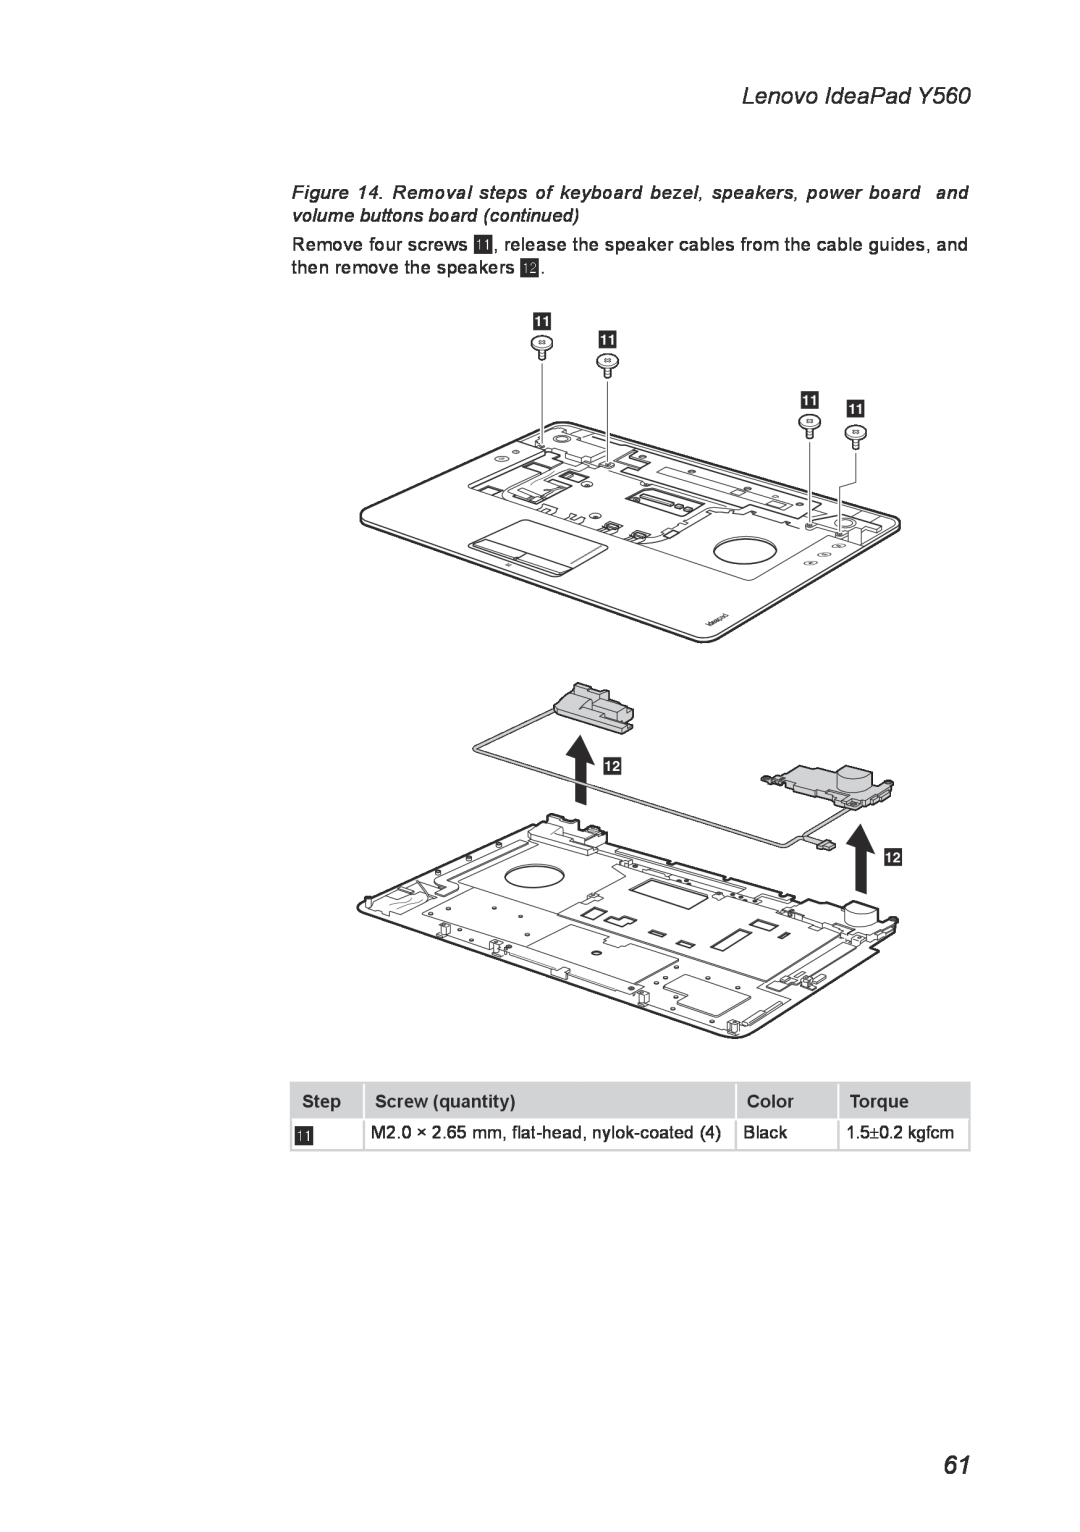 Lenovo manual Lenovo IdeaPad Y560, Step, Screw quantity, Color, Torque 